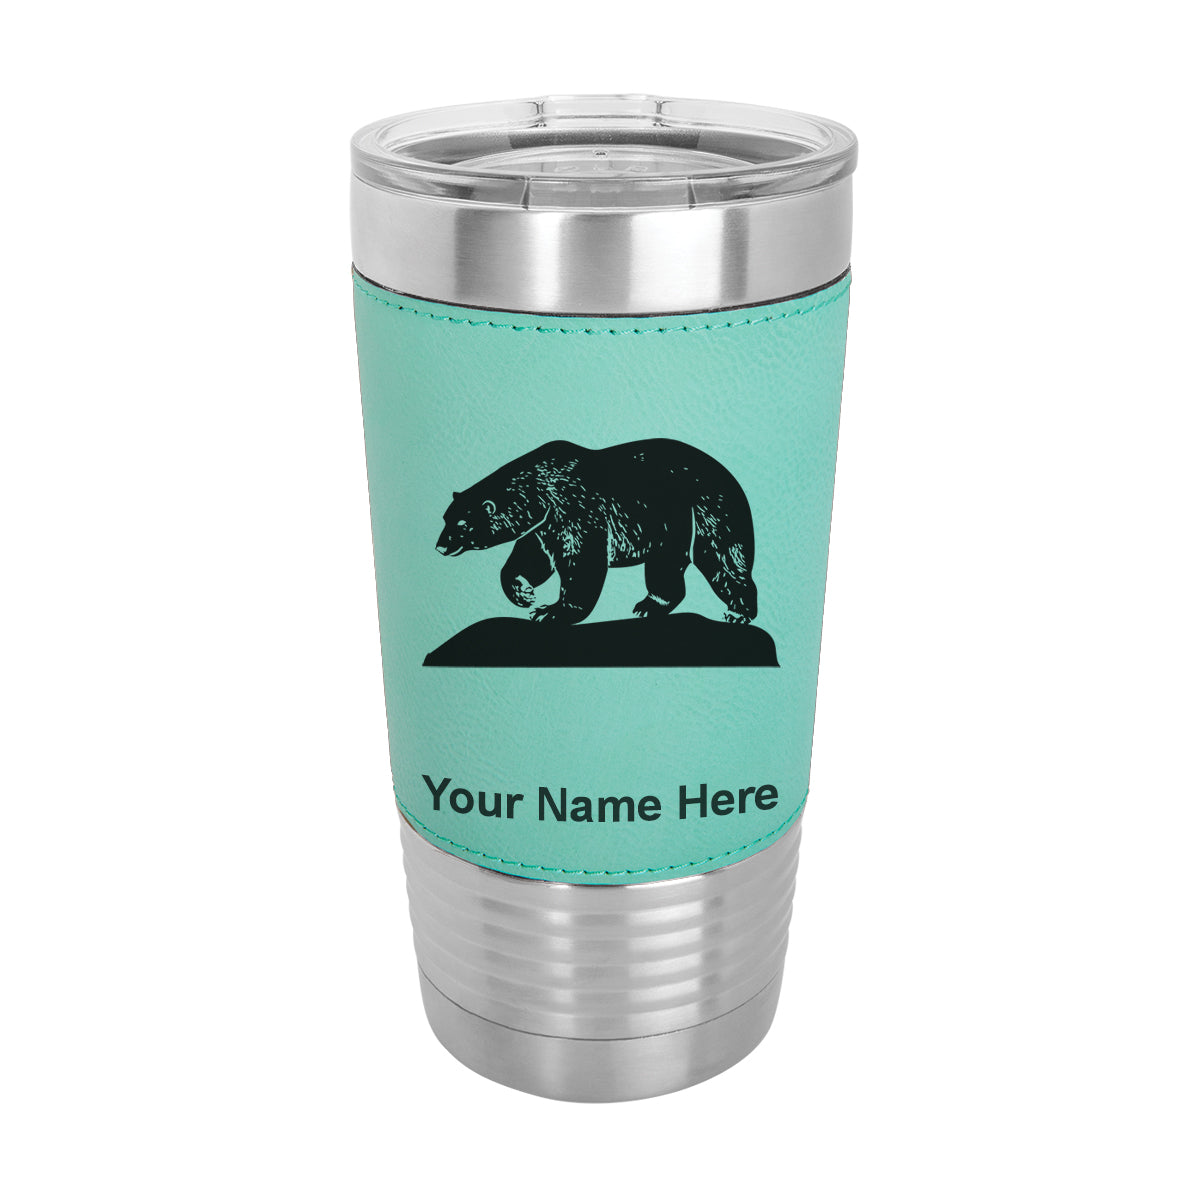 20oz Faux Leather Tumbler Mug, Polar Bear, Personalized Engraving Included - LaserGram Custom Engraved Gifts